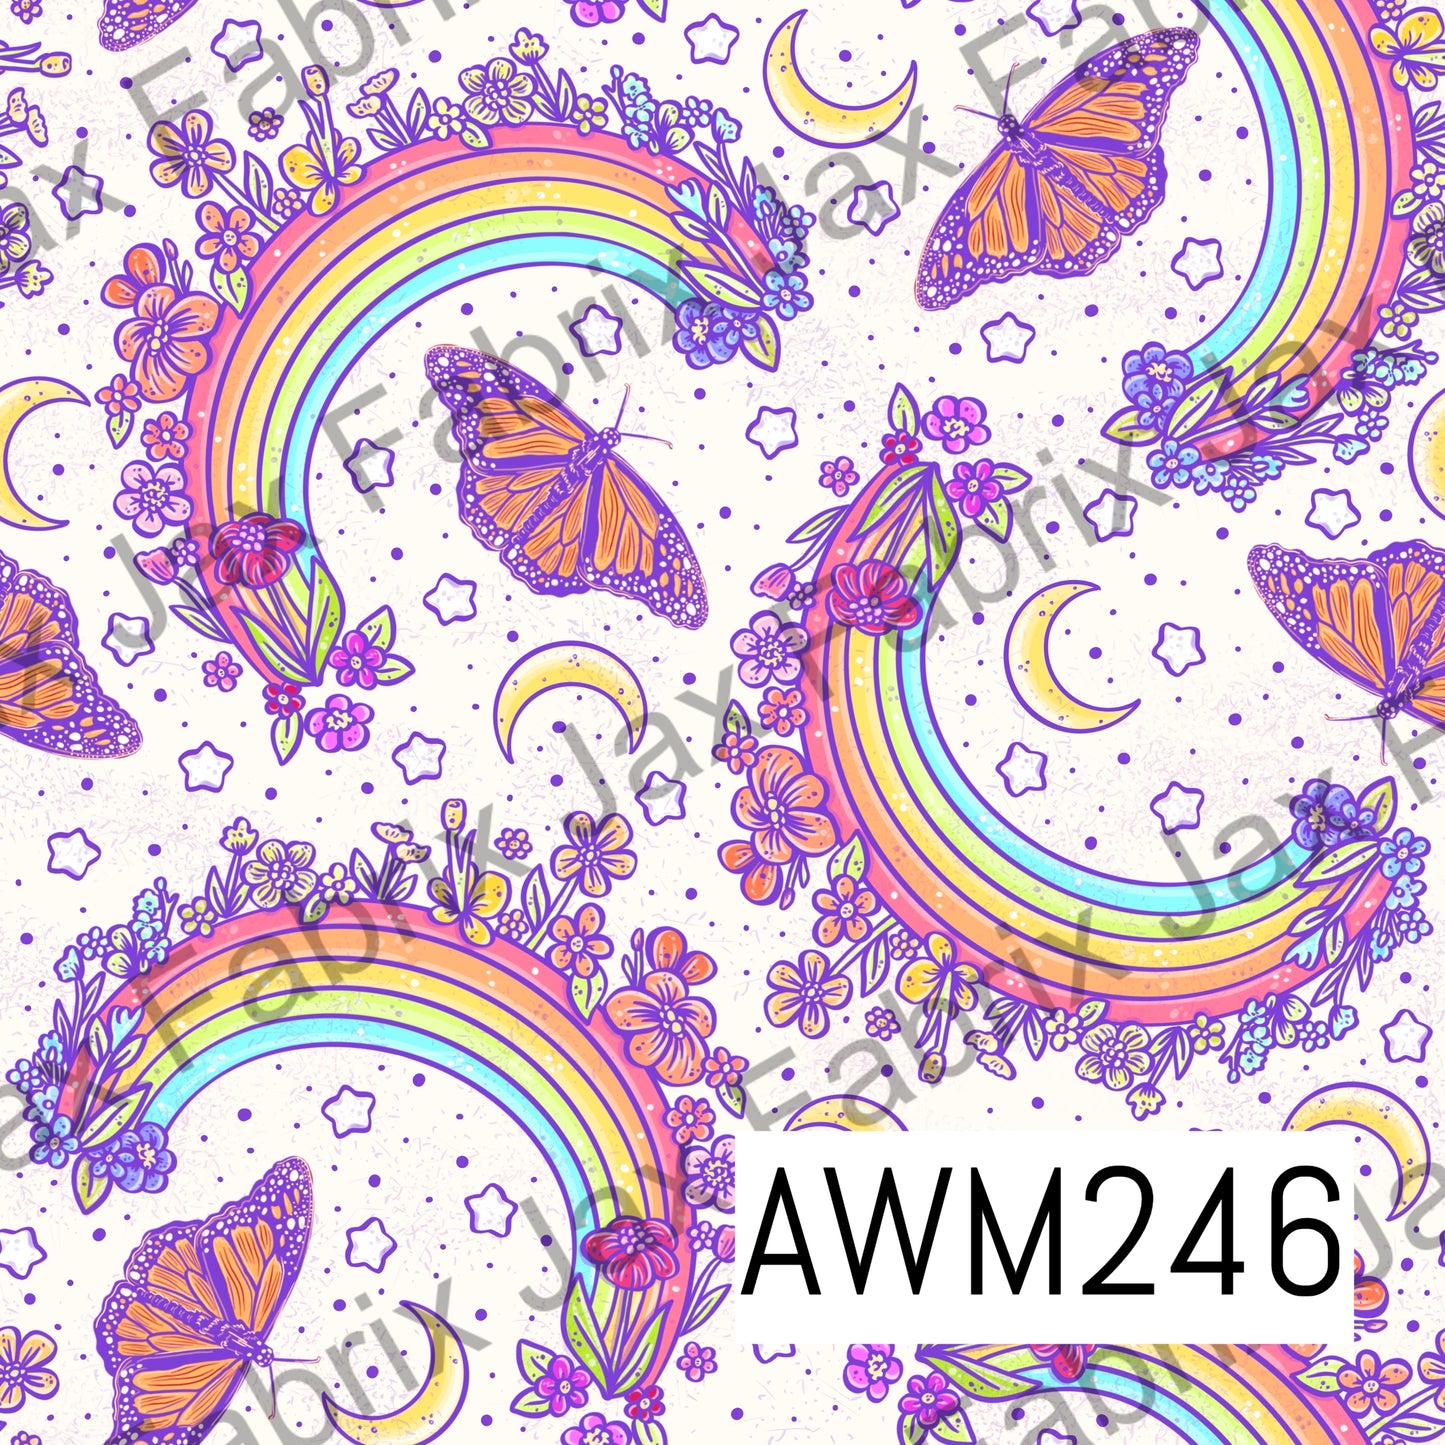 Rainbows and Butterflies White AWM246